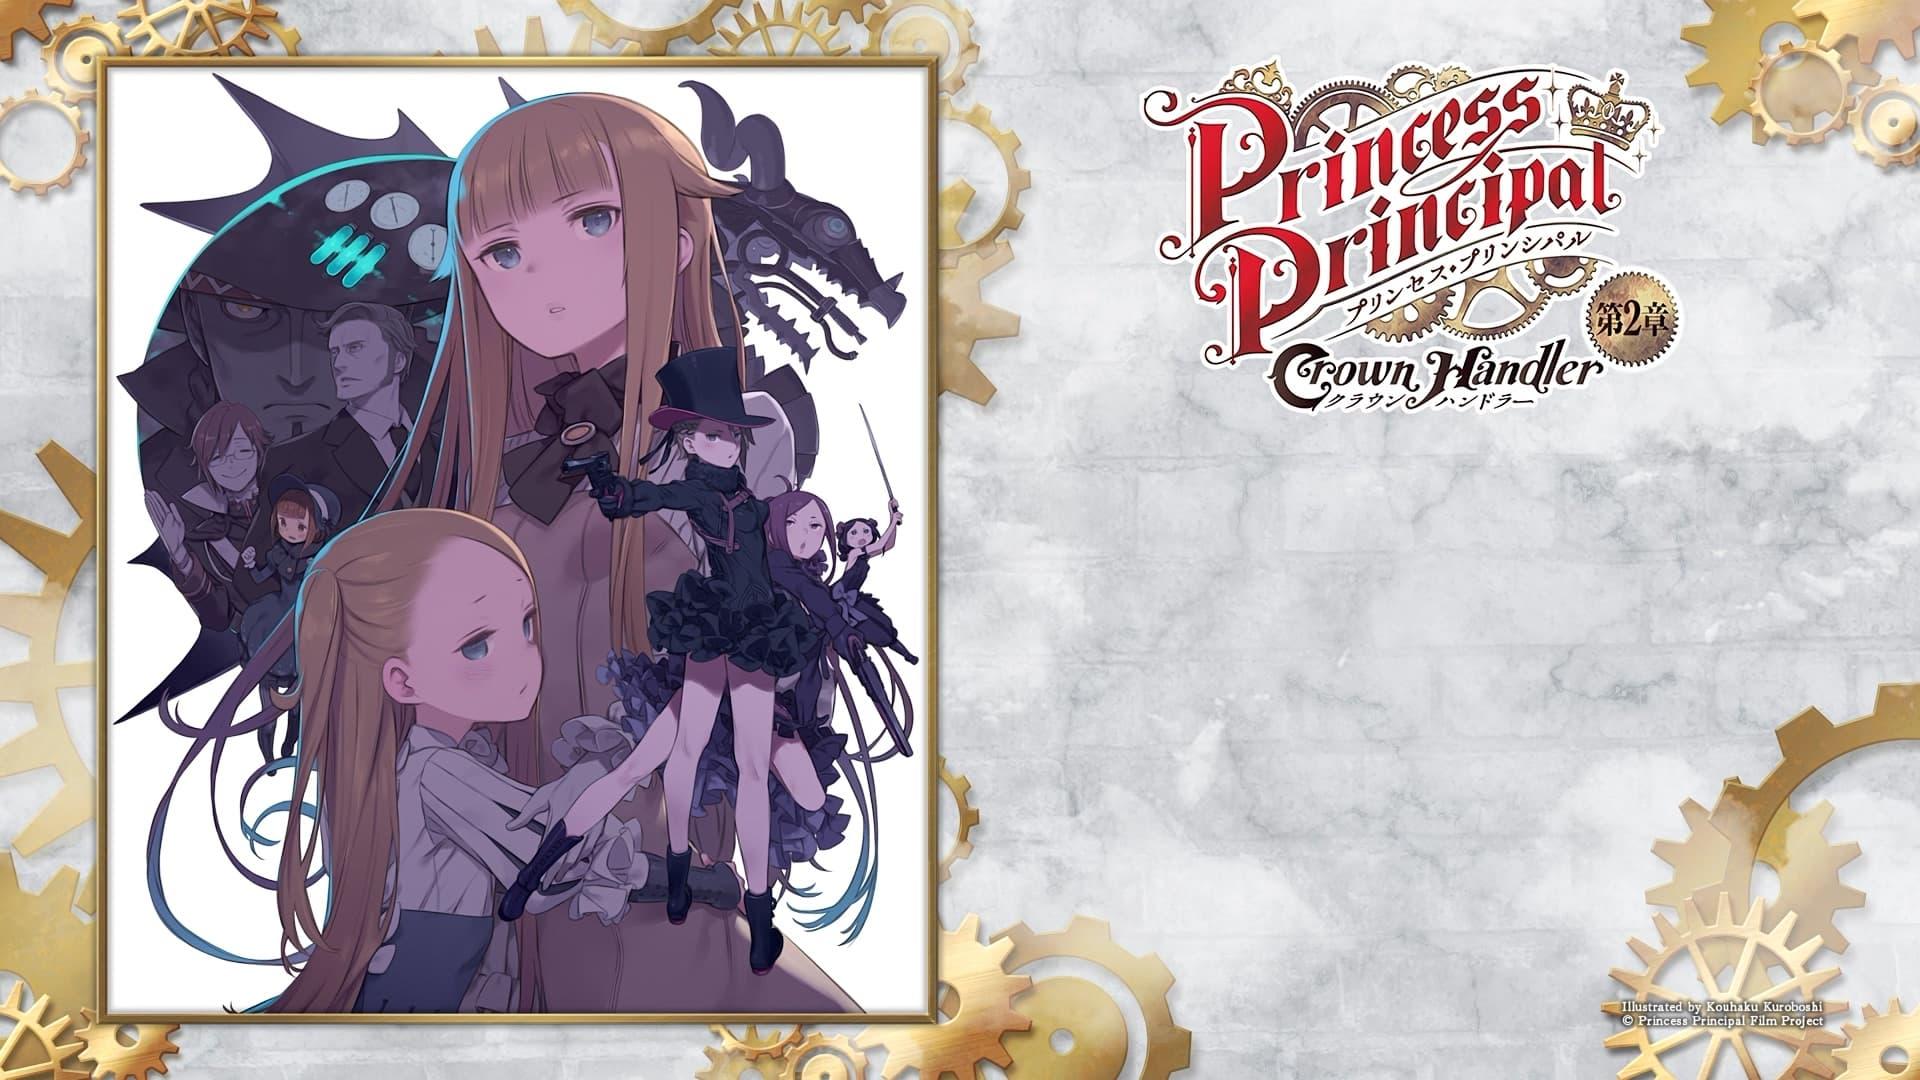 Princess Principal Crown Handler: Chapter 2 backdrop